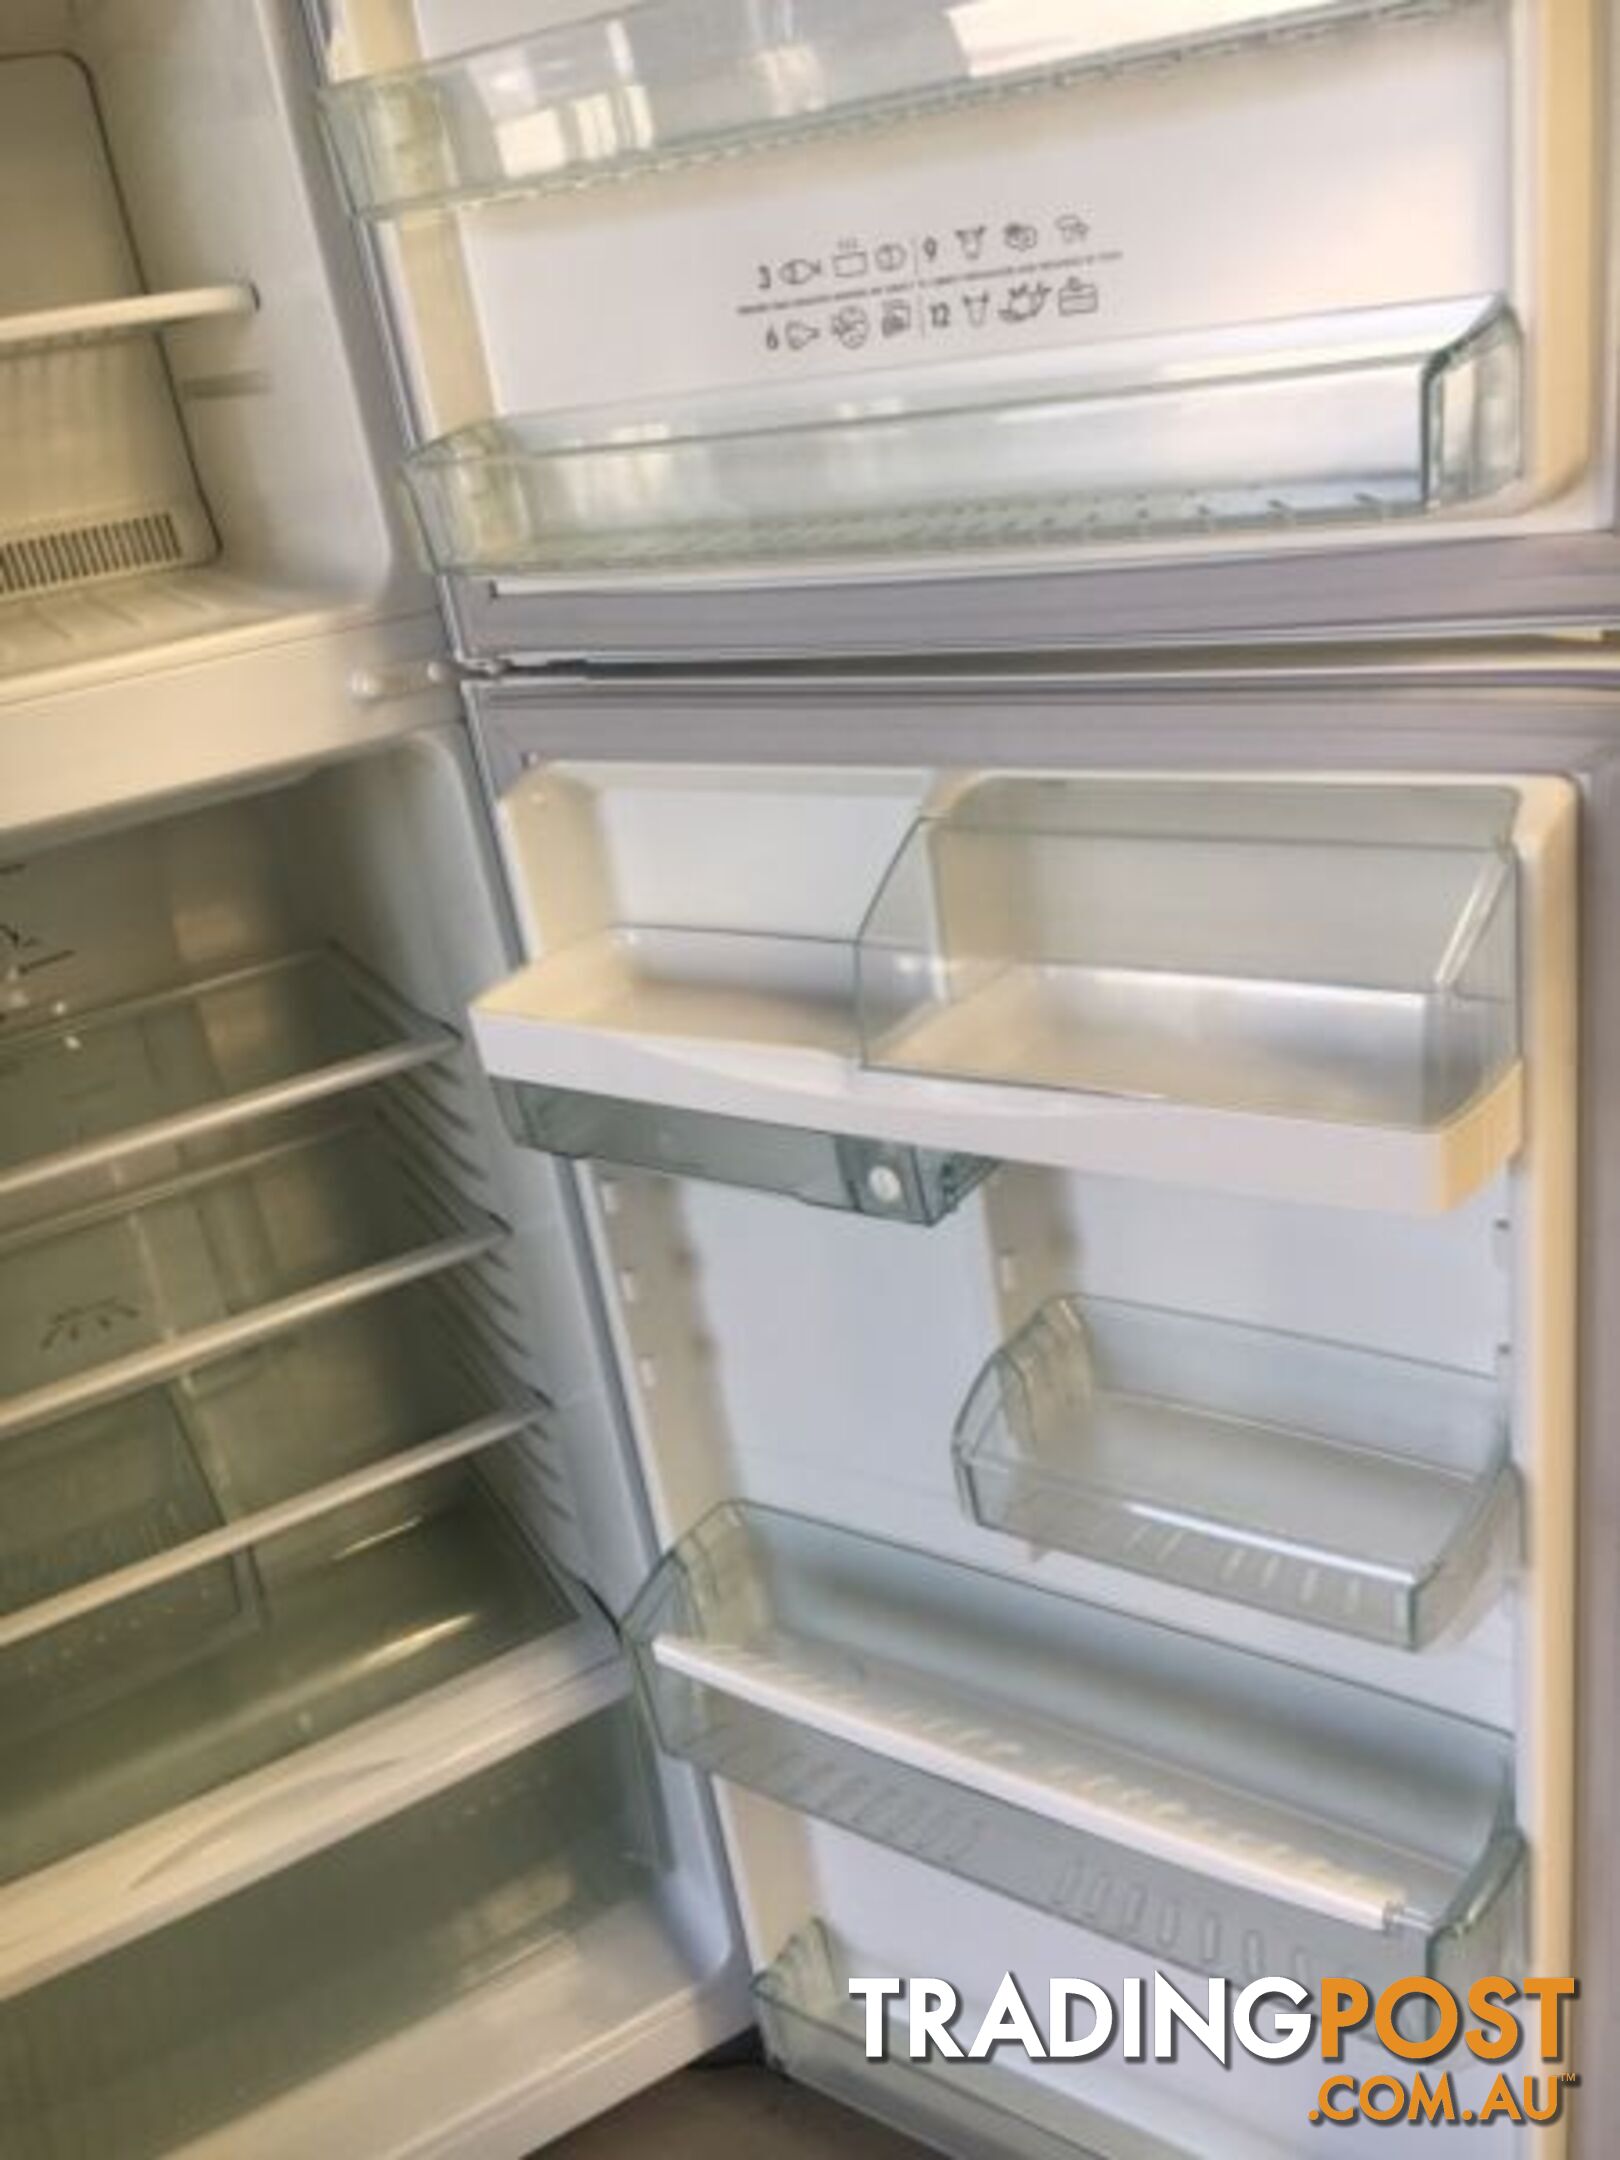 390l Westinghouse fridge freezer DELIVERY WARRANTY